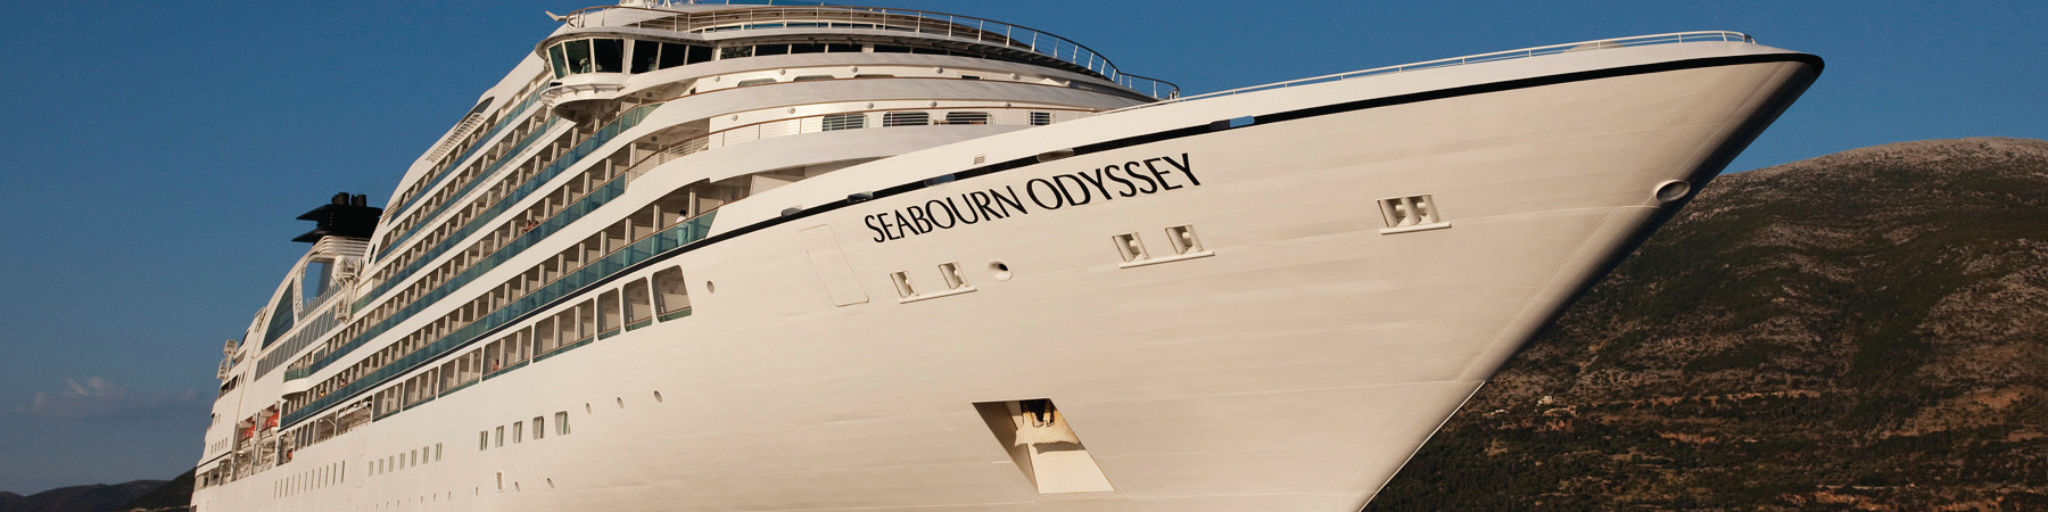 Seabourn Odyssey